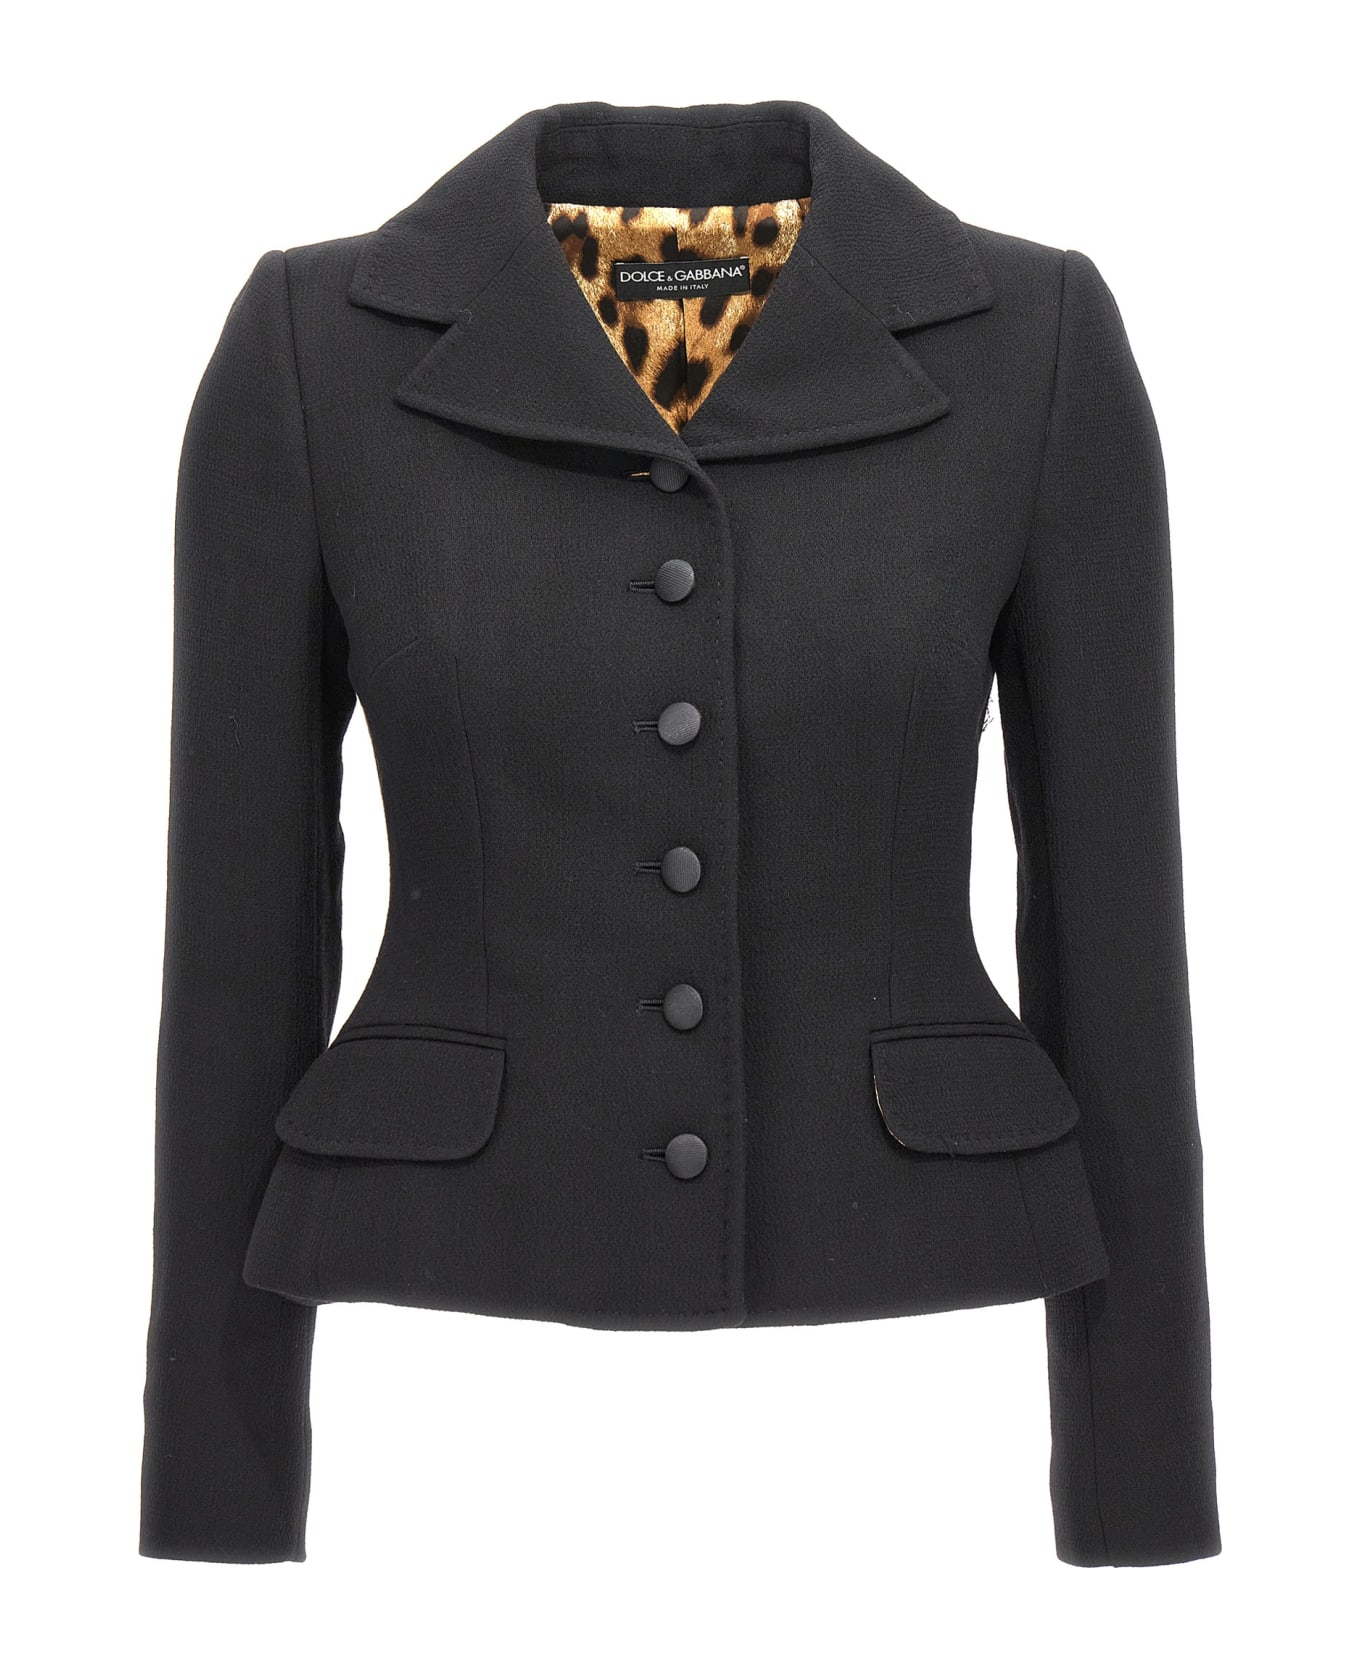 Dolce & Gabbana Blazer Jacket - Black